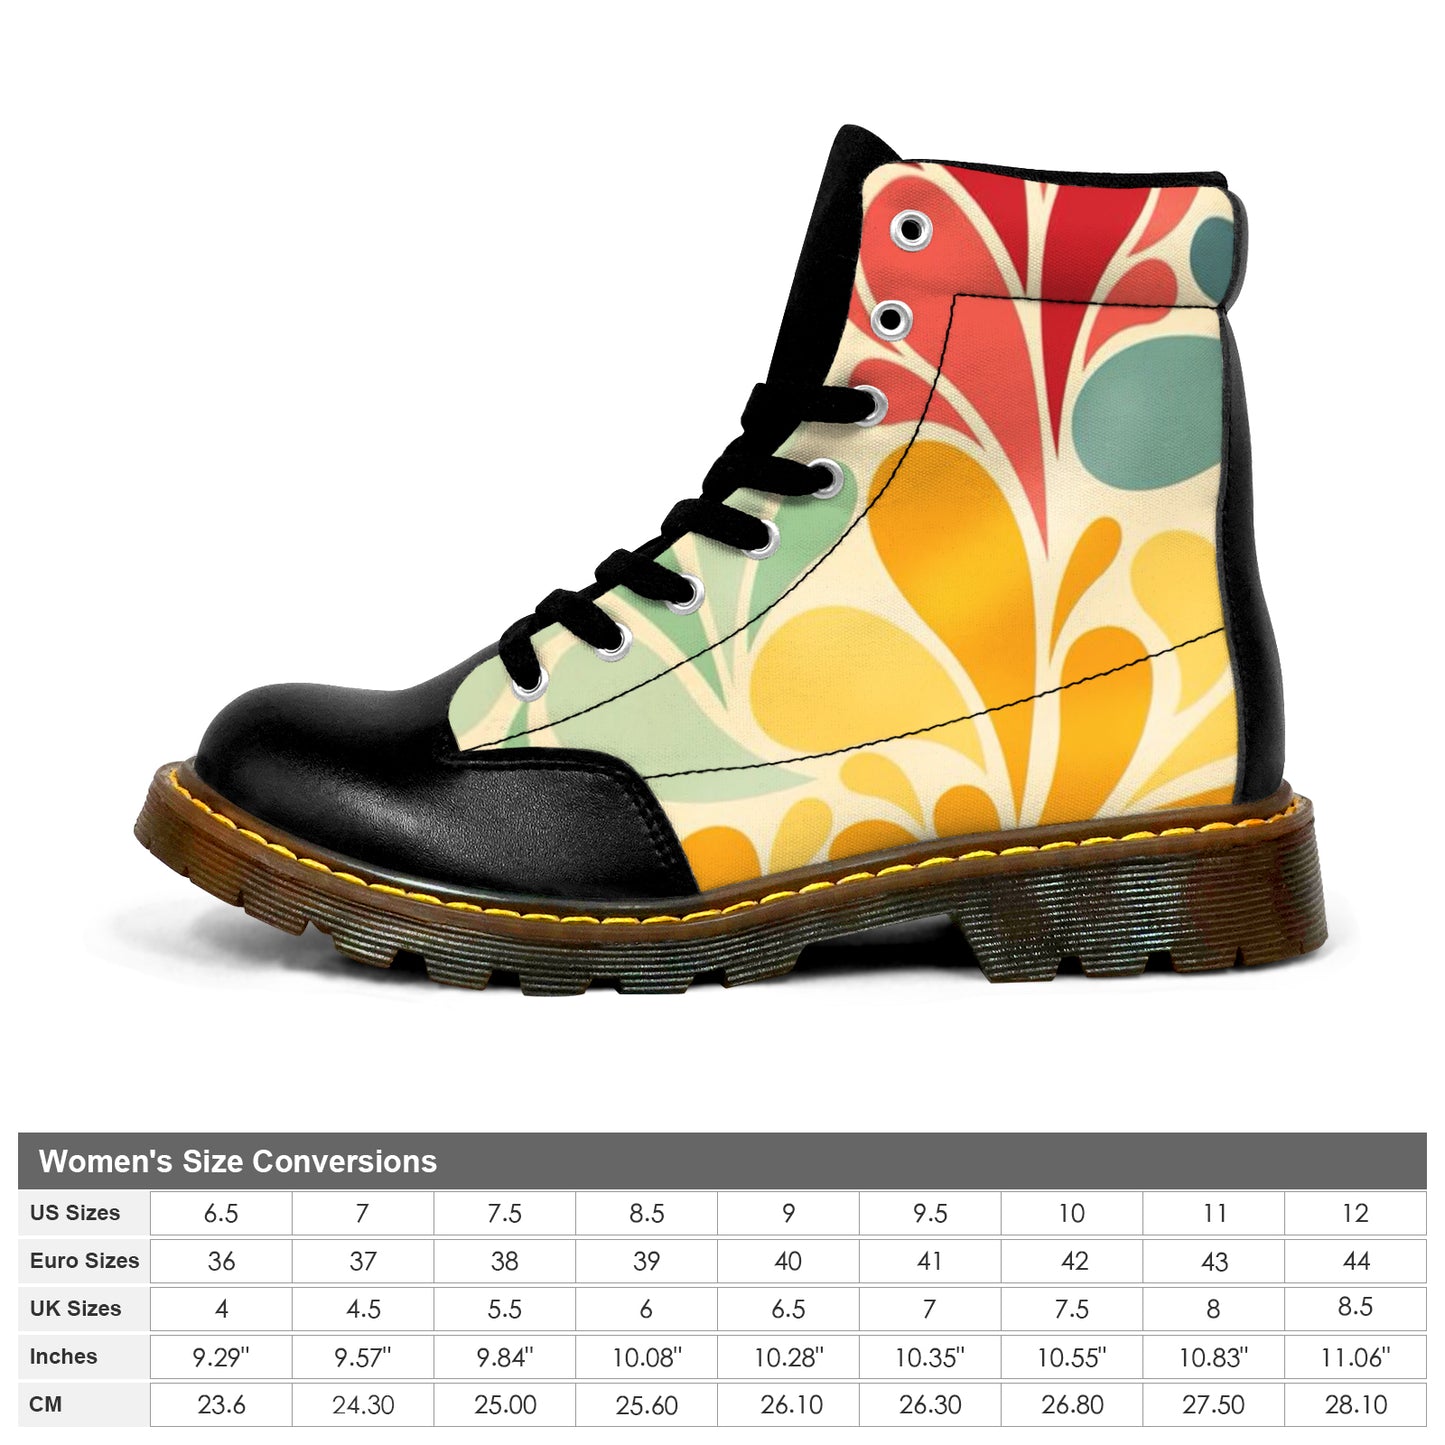 Winter Round Toe Women's Boots - Retro Floral